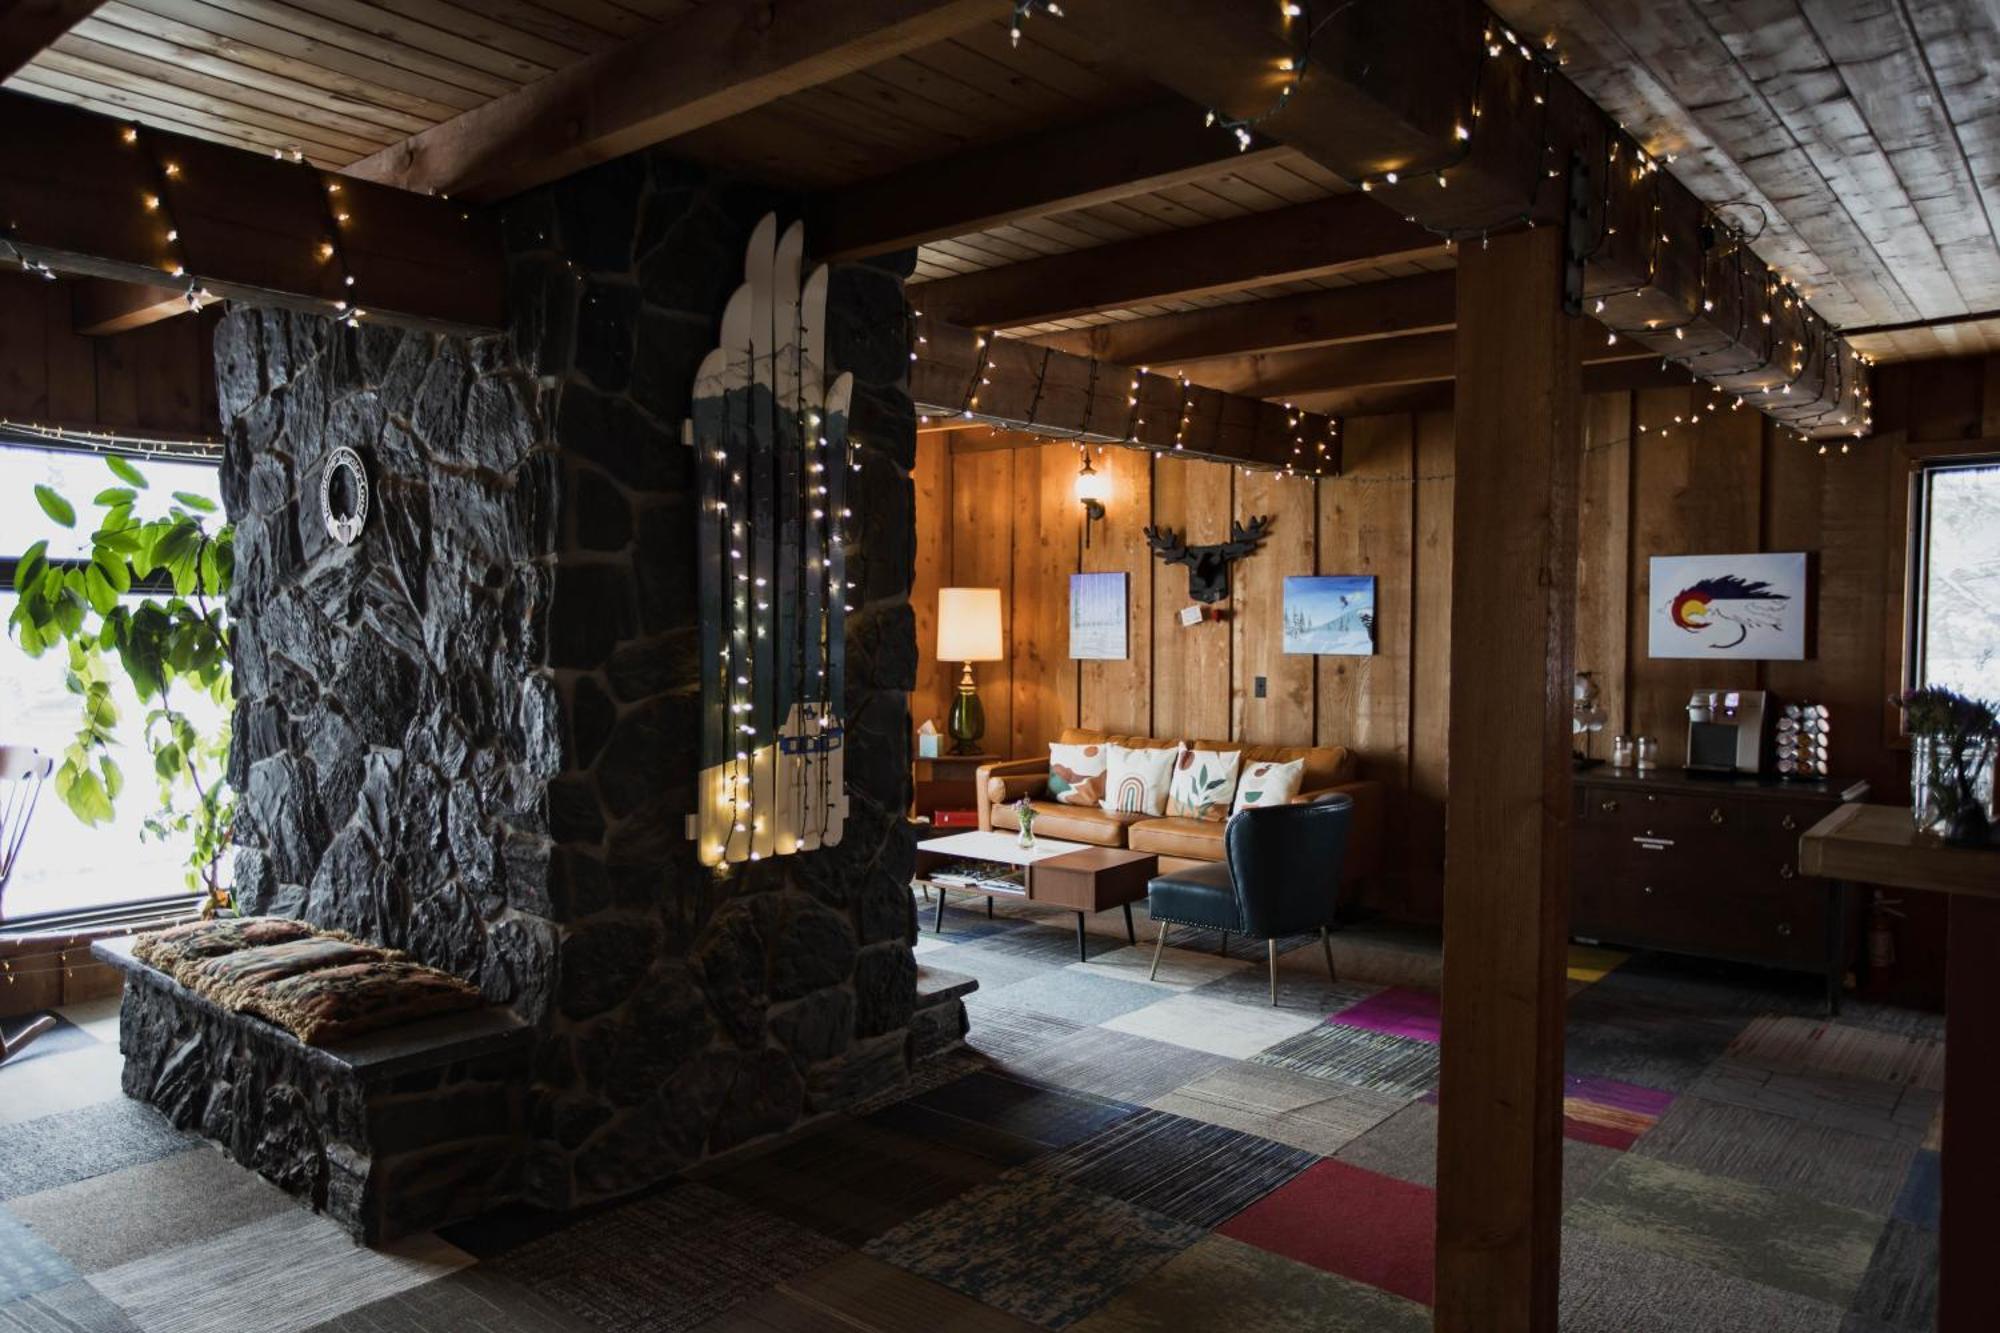 The Viking Lodge - Downtown Winter Park Colorado المظهر الخارجي الصورة